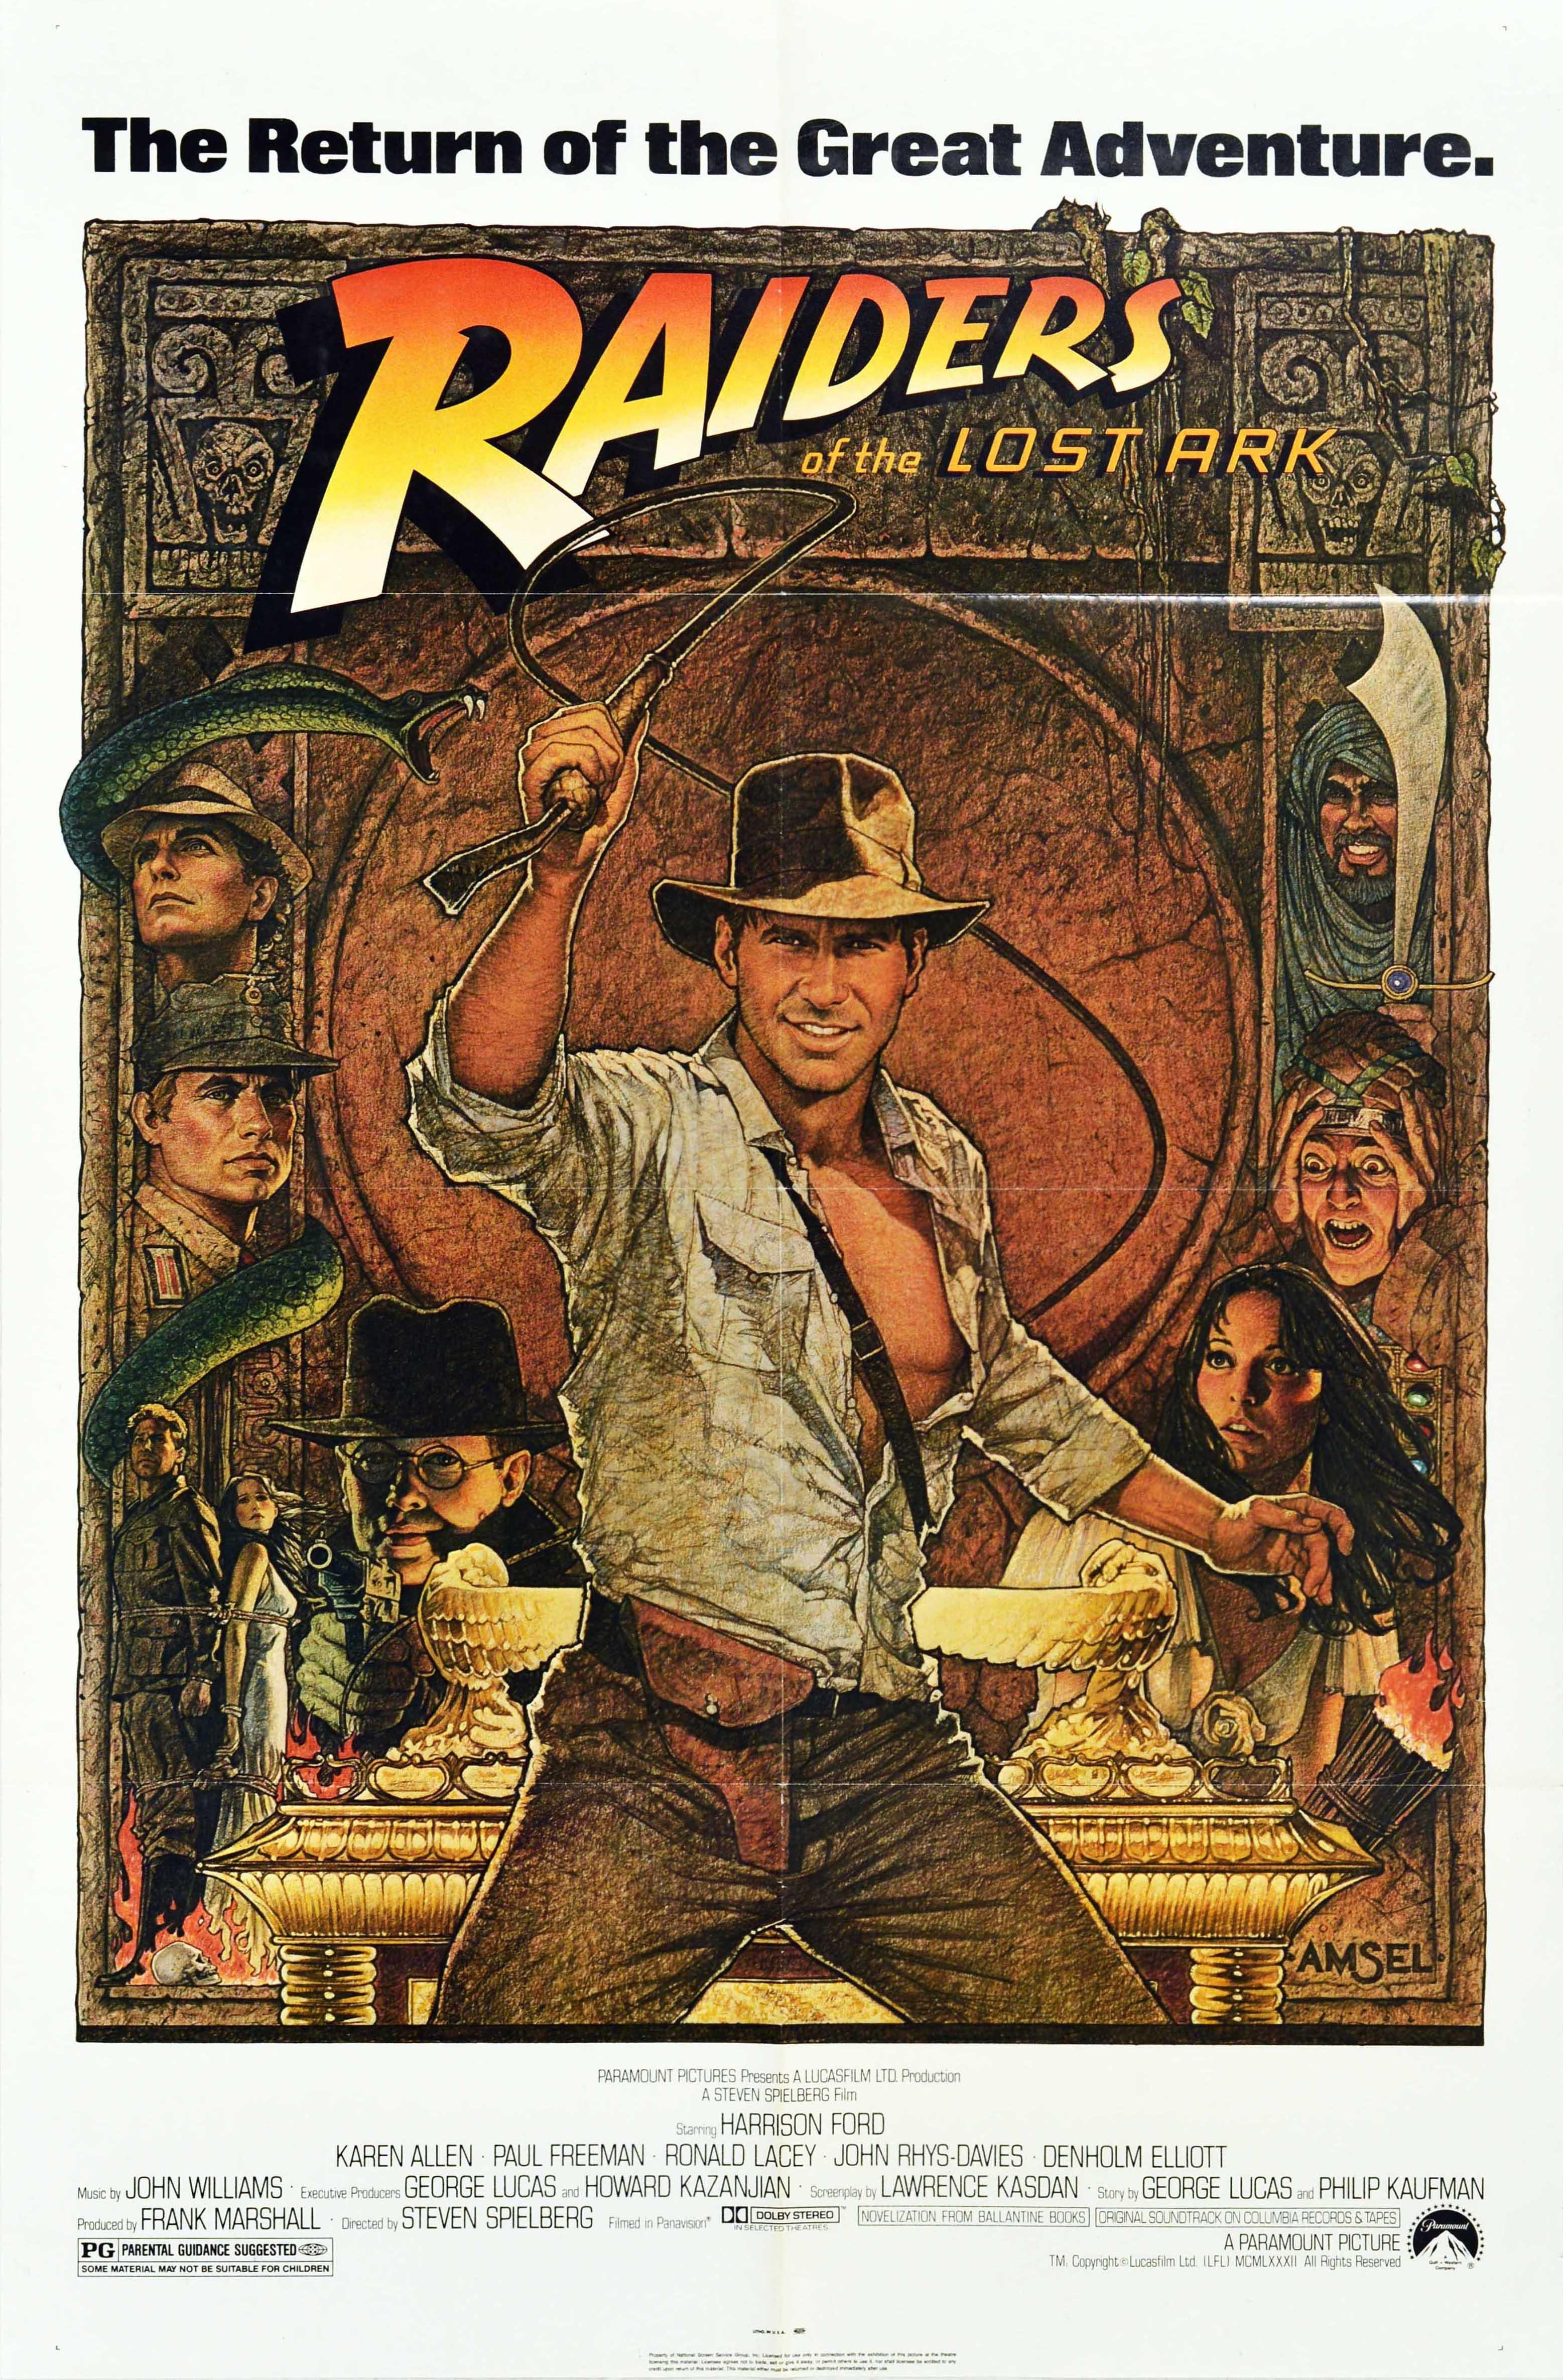 Richard Amsel Print - Original Vintage Film Poster For Indiana Jones Raiders Of The Lost Ark Adventure